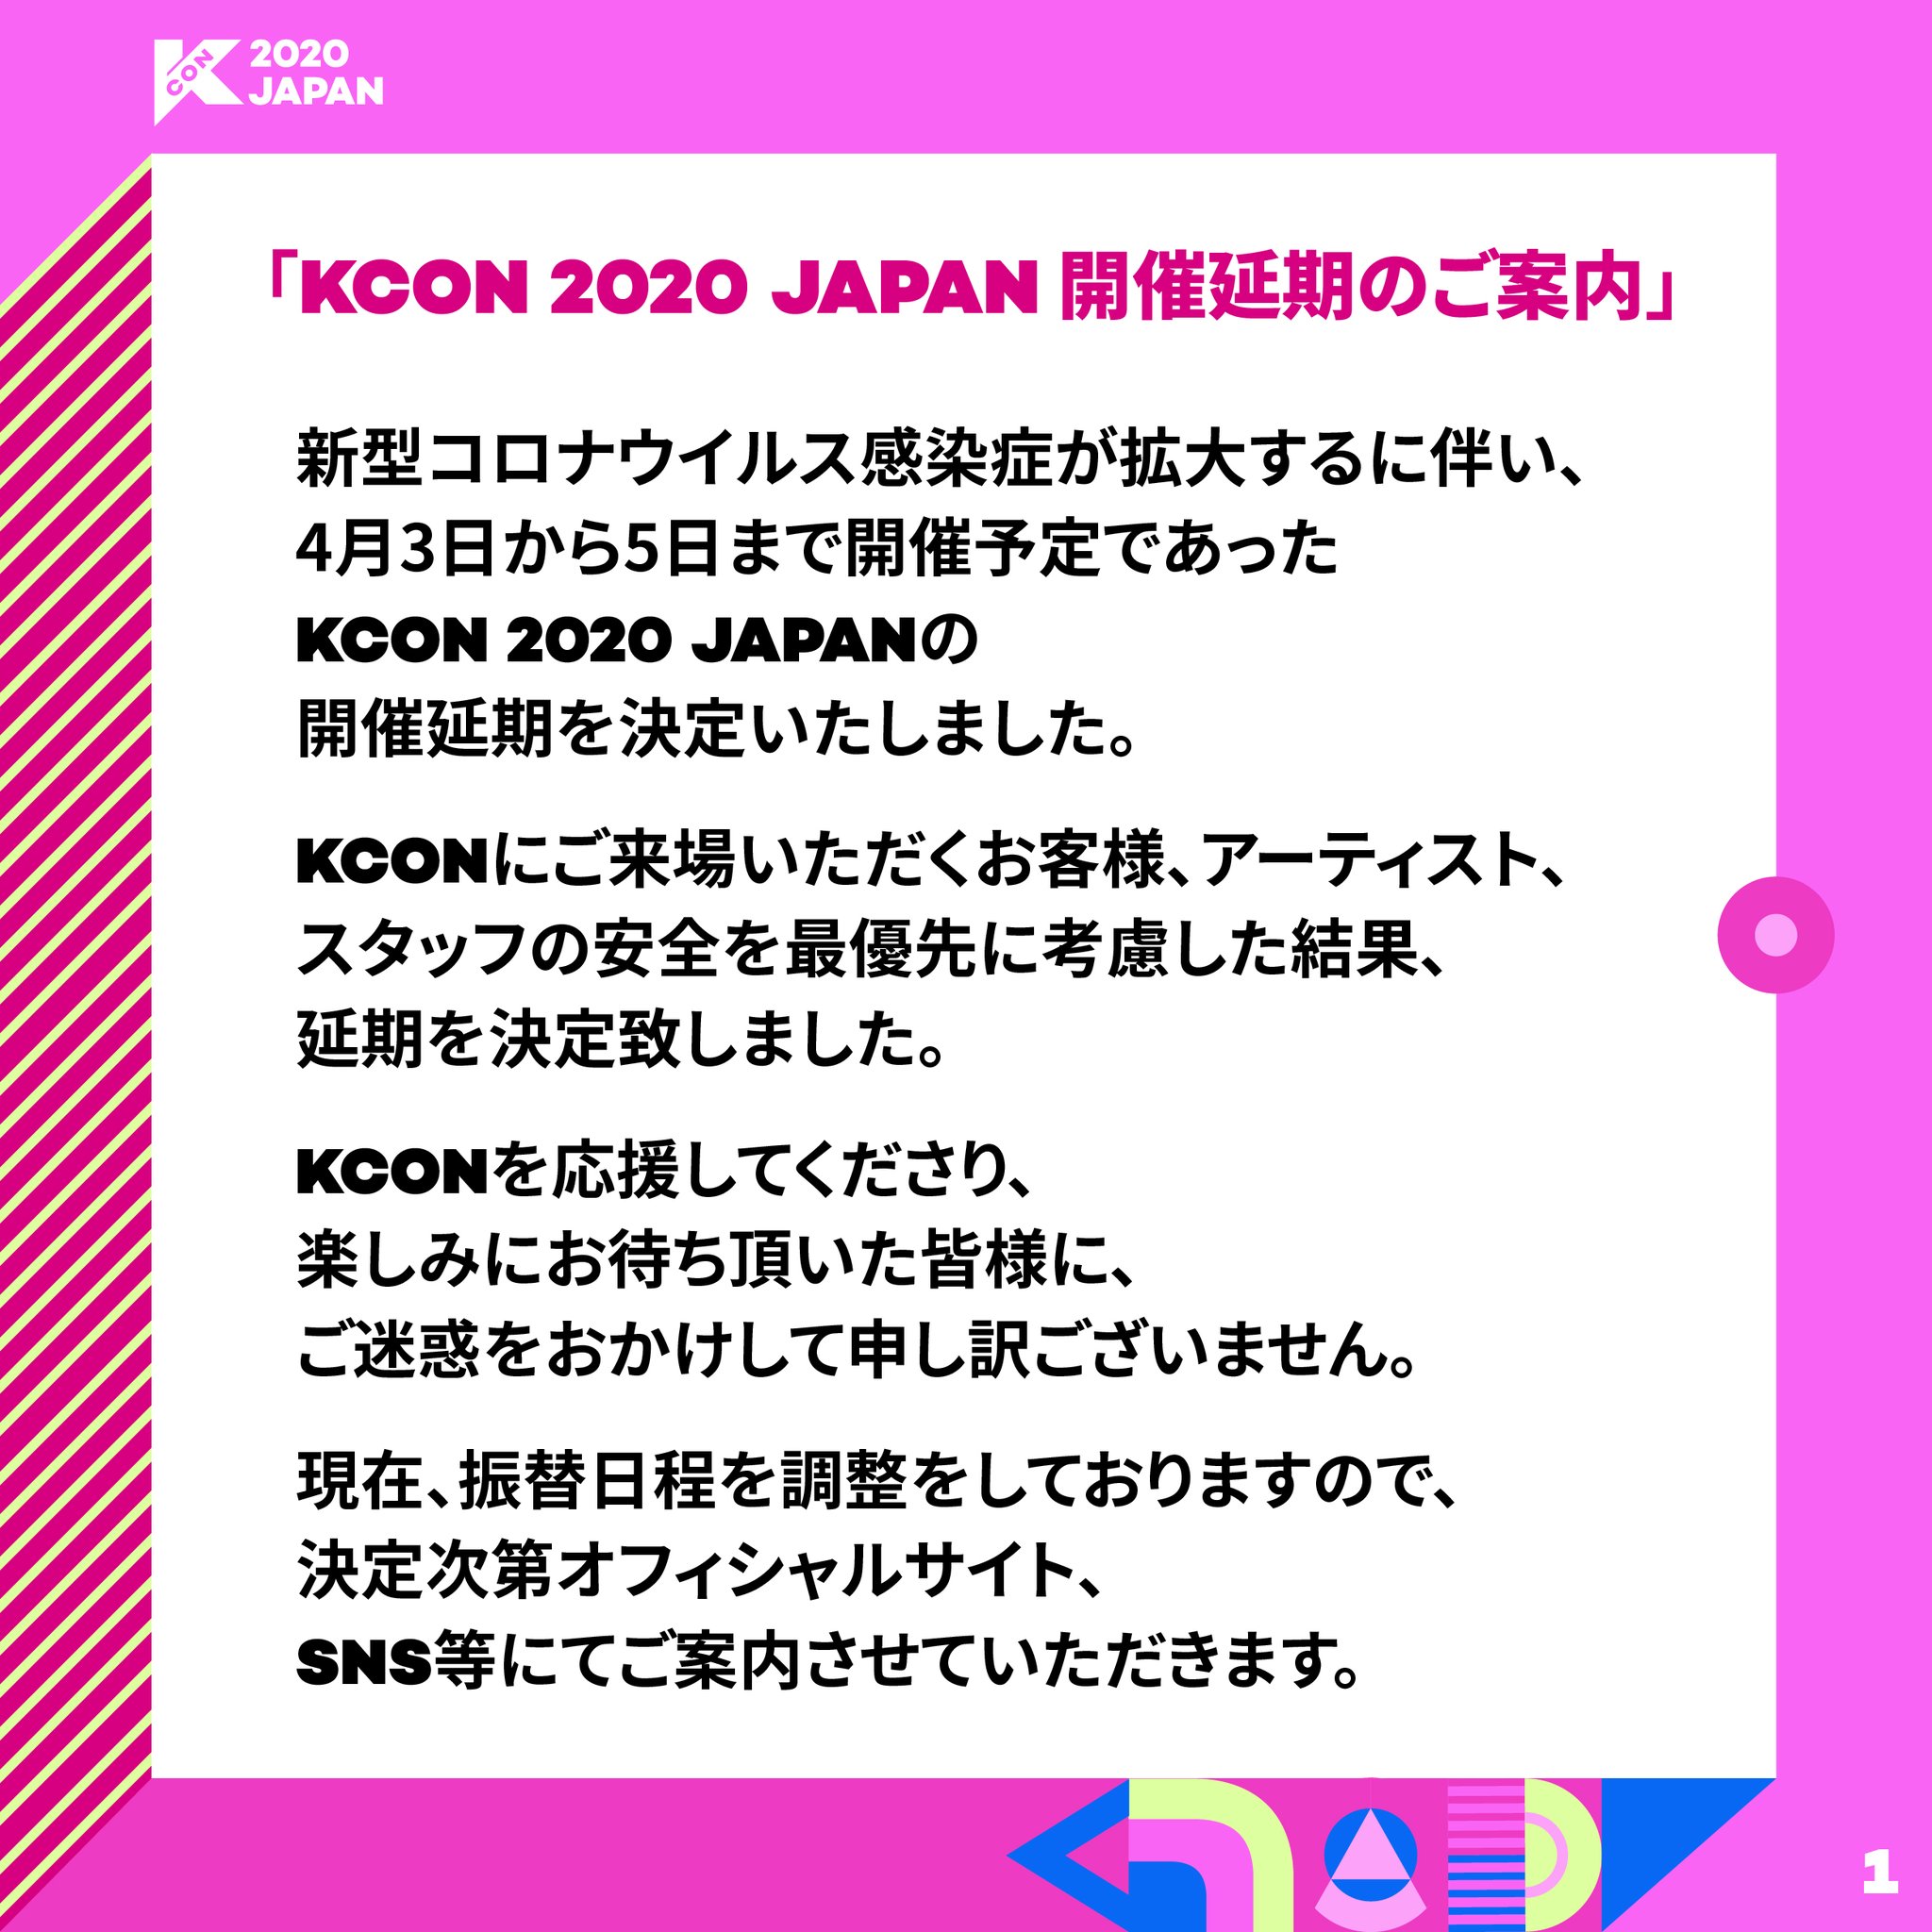 Re: [情報] KCON 2020 JAPAN 延期公告